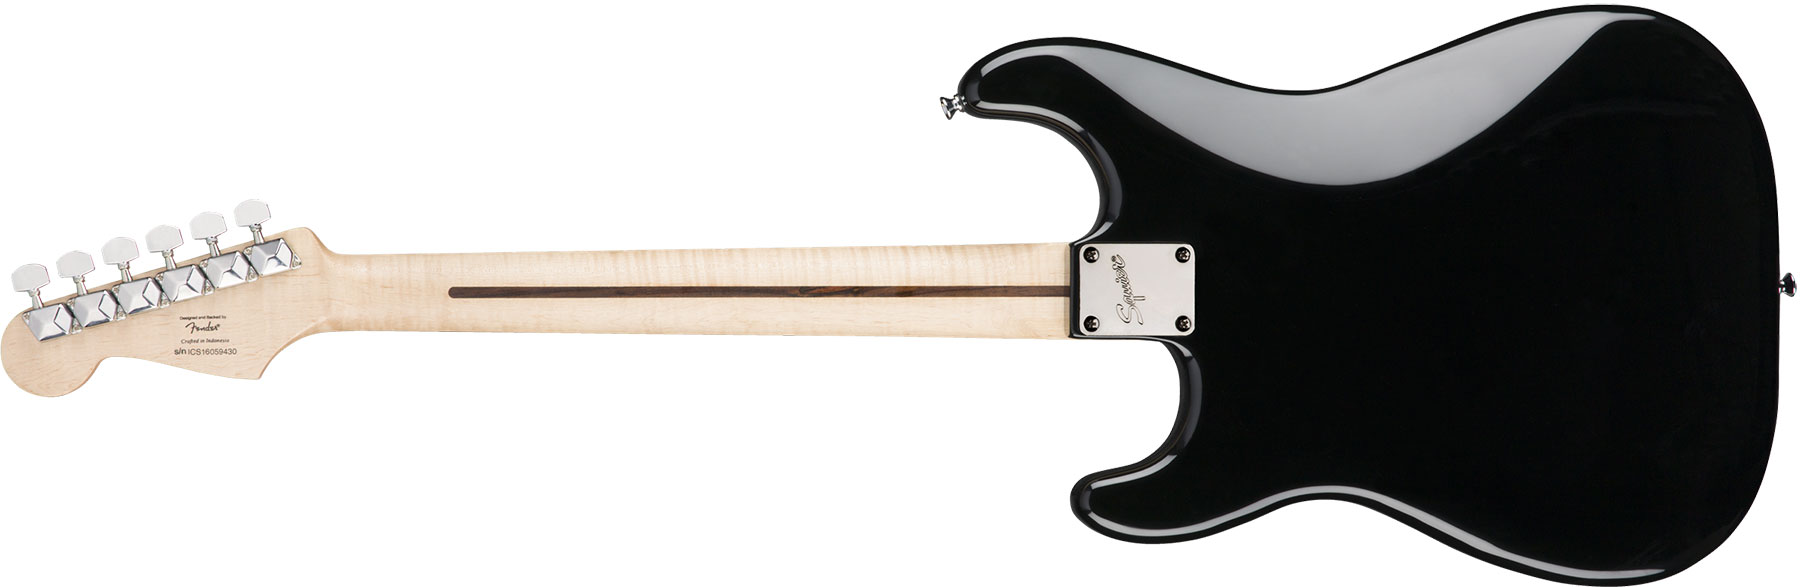 Squier Bullet Stratocaster Ht Sss Rw - Black - Str shape electric guitar - Variation 1